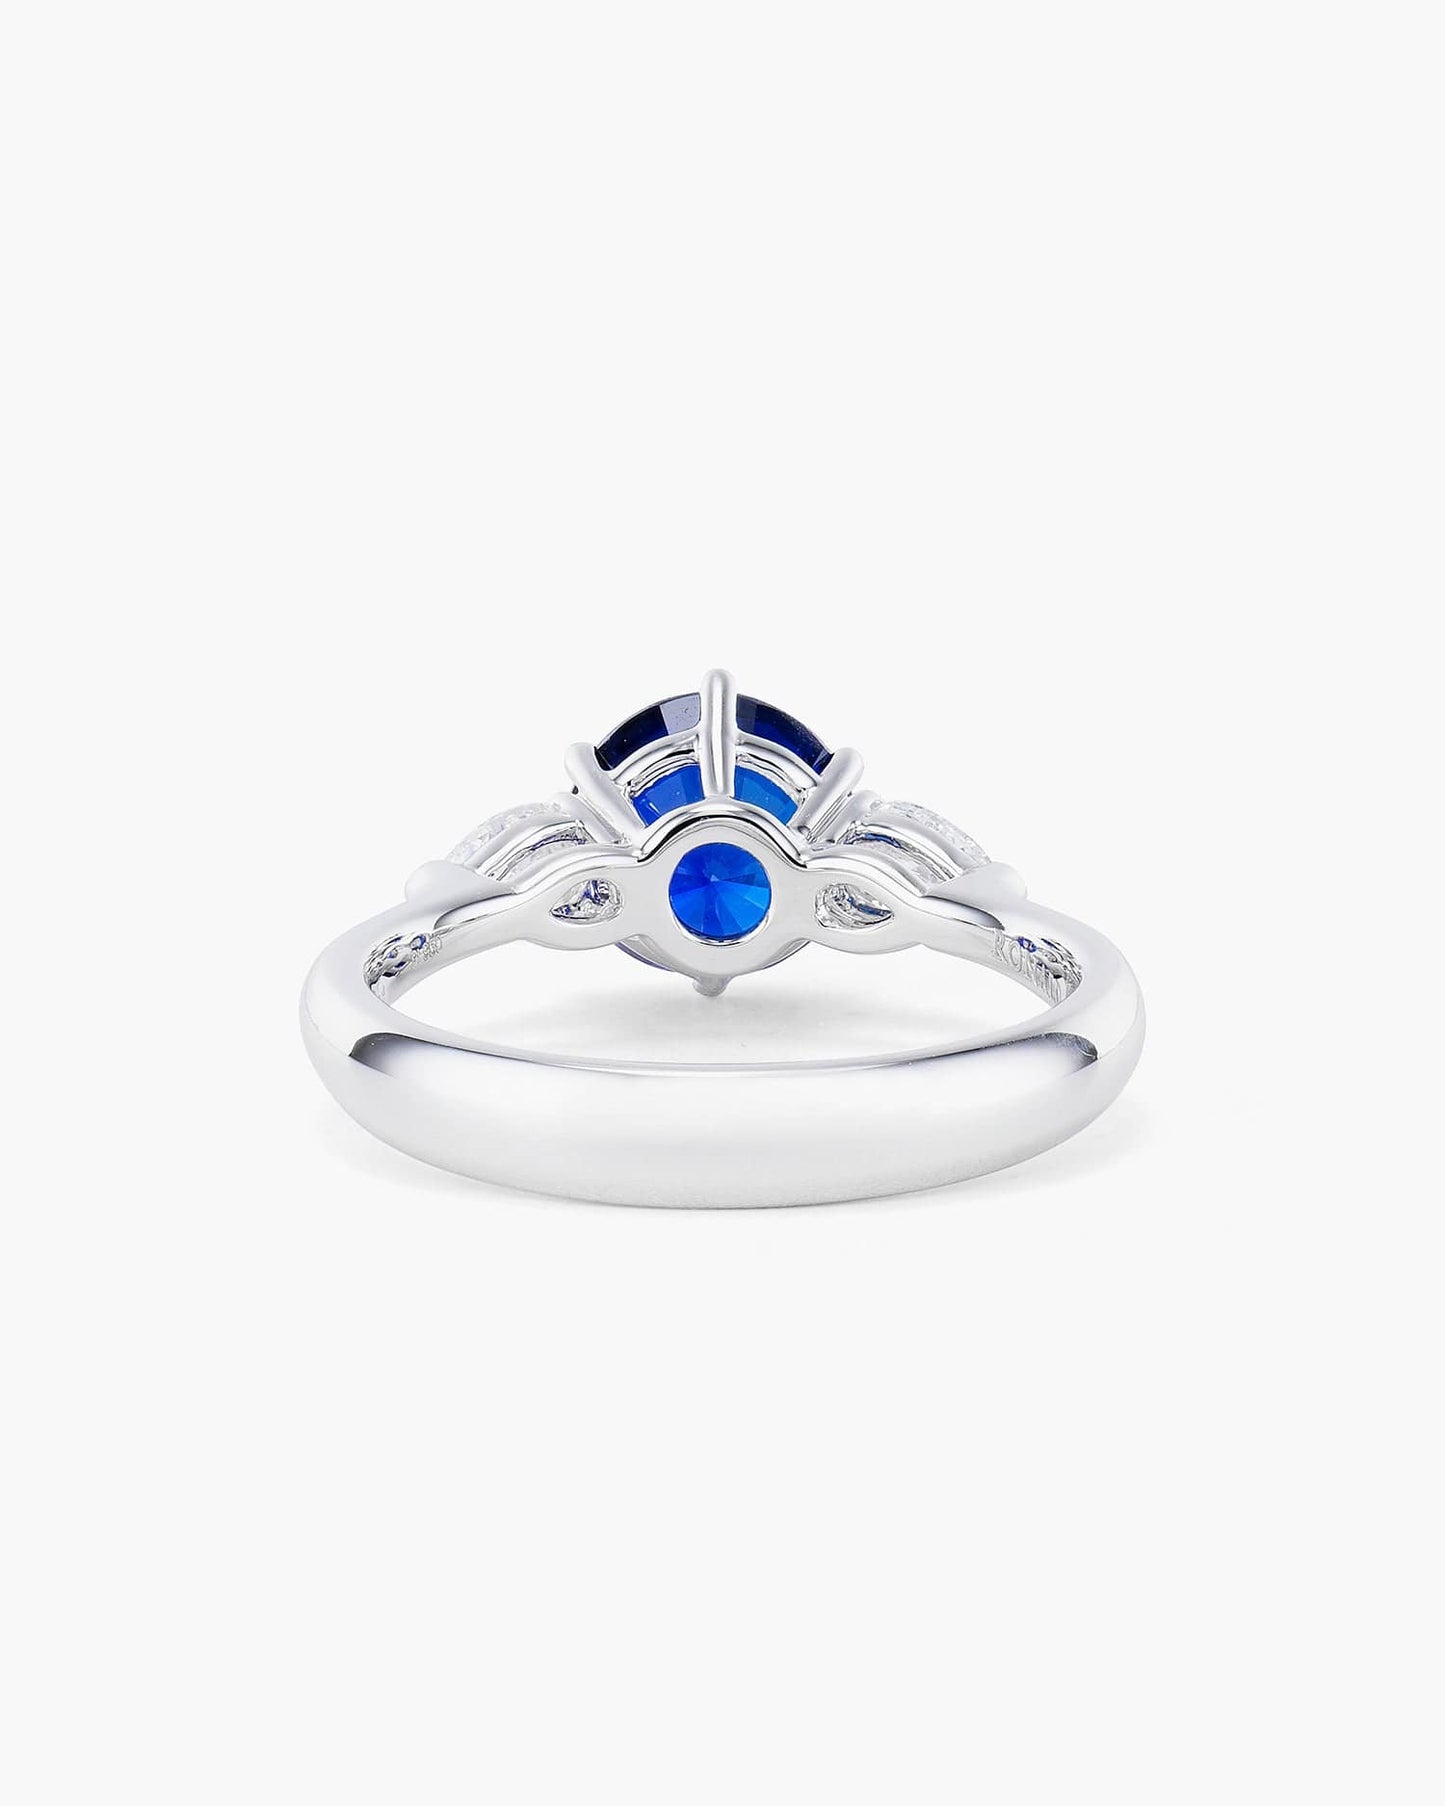 2.18 carat Round Cut Sapphire and Diamond Ring